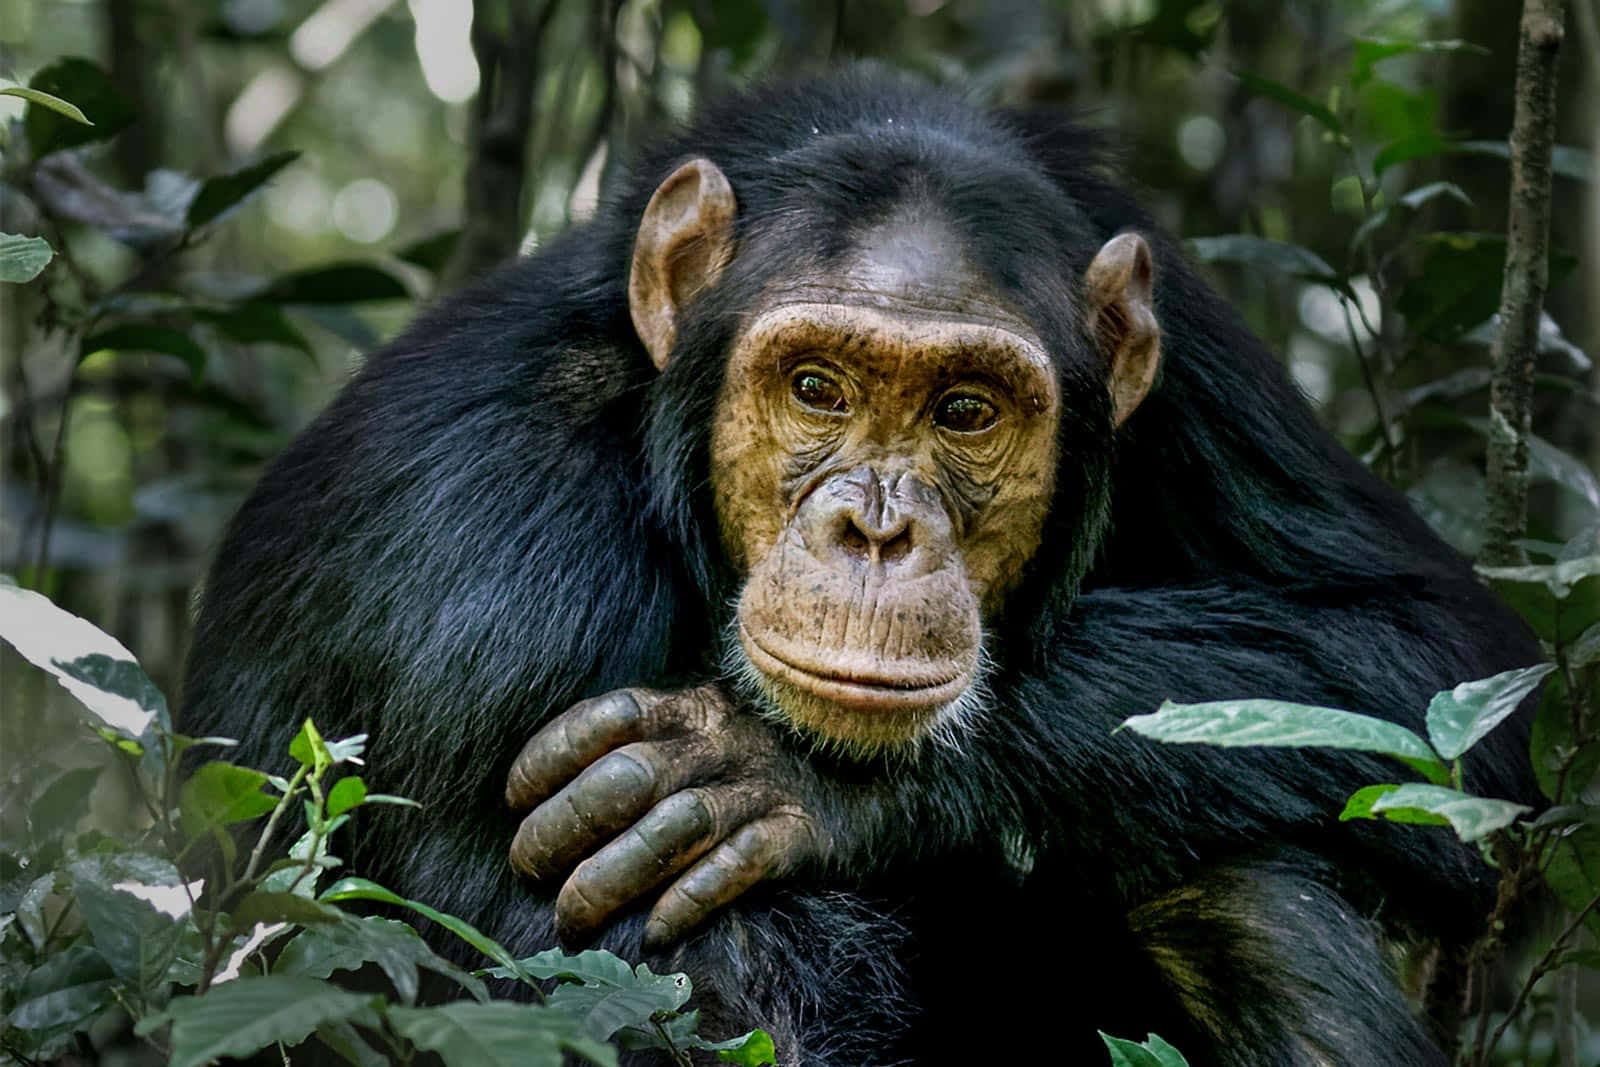 A happy chimpanzee enjoying the day